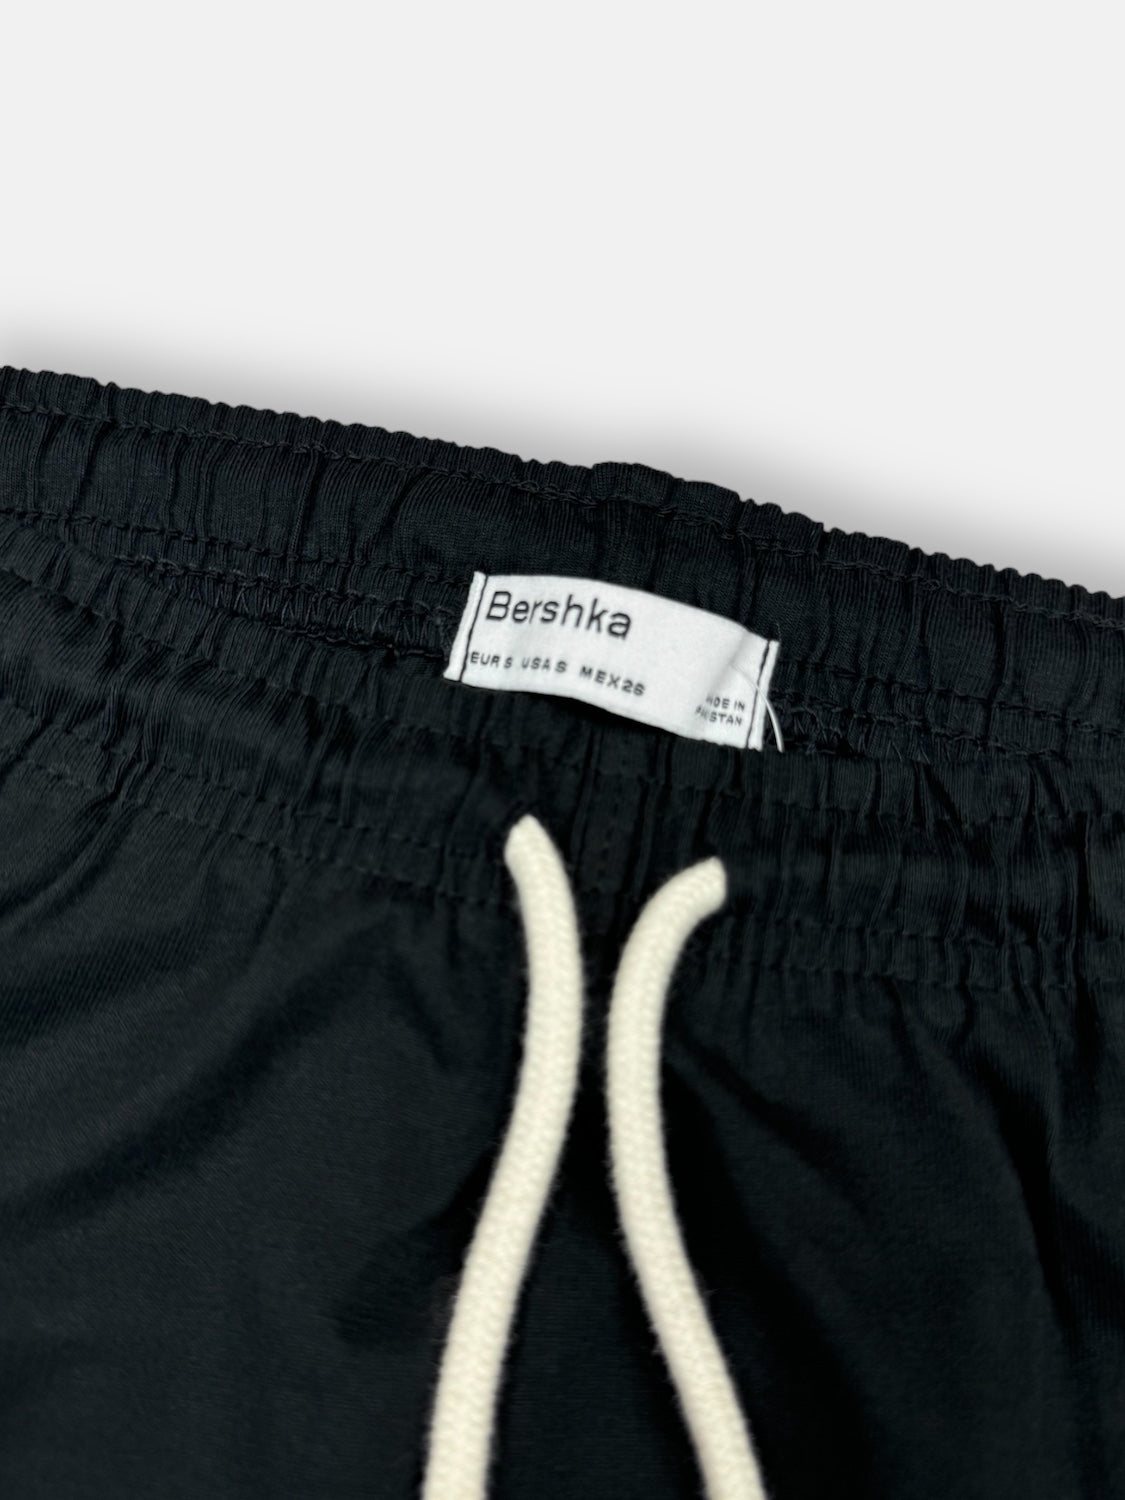 BRSHKA Premium Cotton 3Quater Shorts (Black)